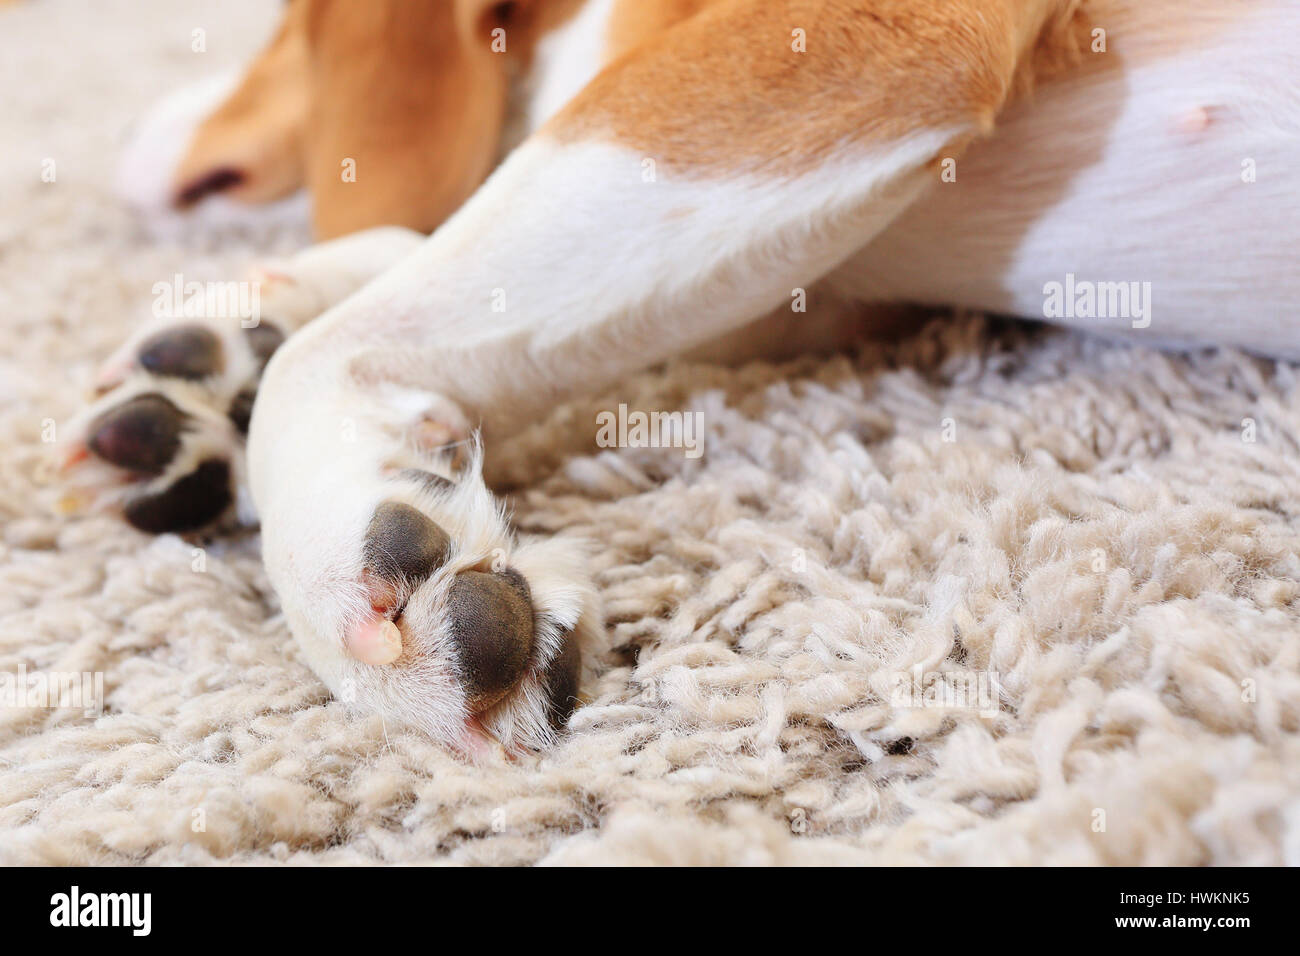 Paws of lazy dog close-up. White dog paws on defocused laying dog background. Closeup of paws on white fluffy carpet background. Stock Photo